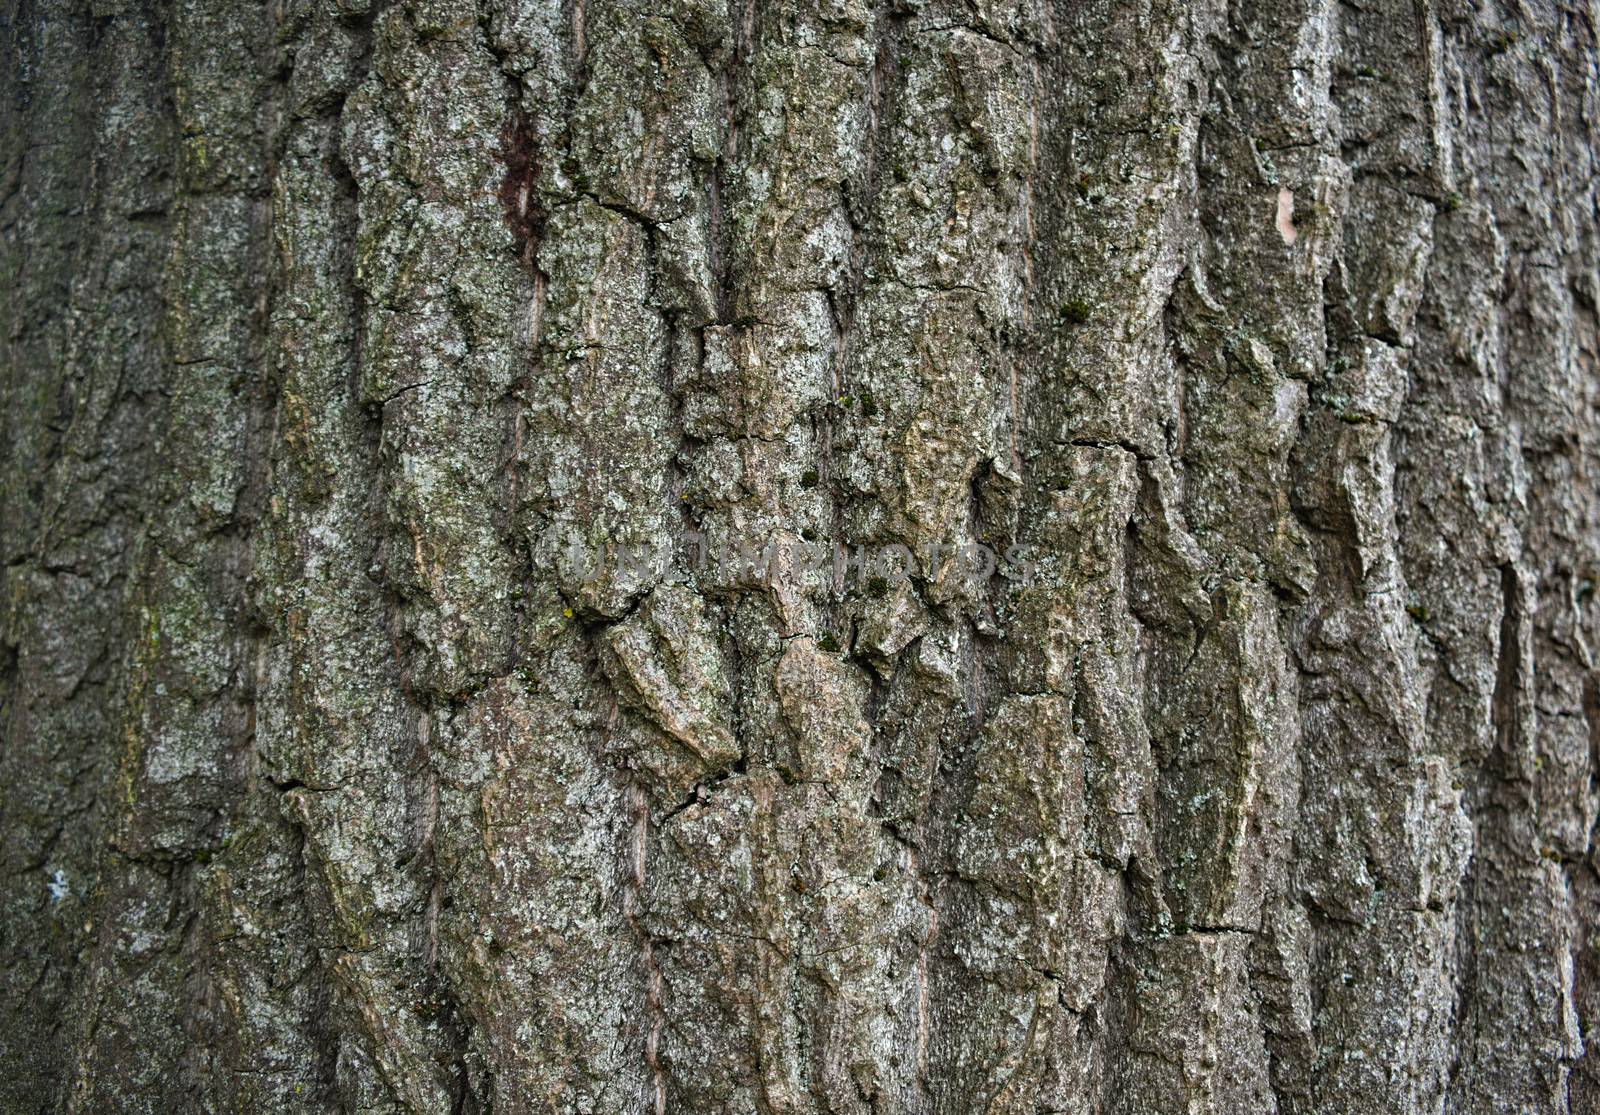 Big tree bark, close up view